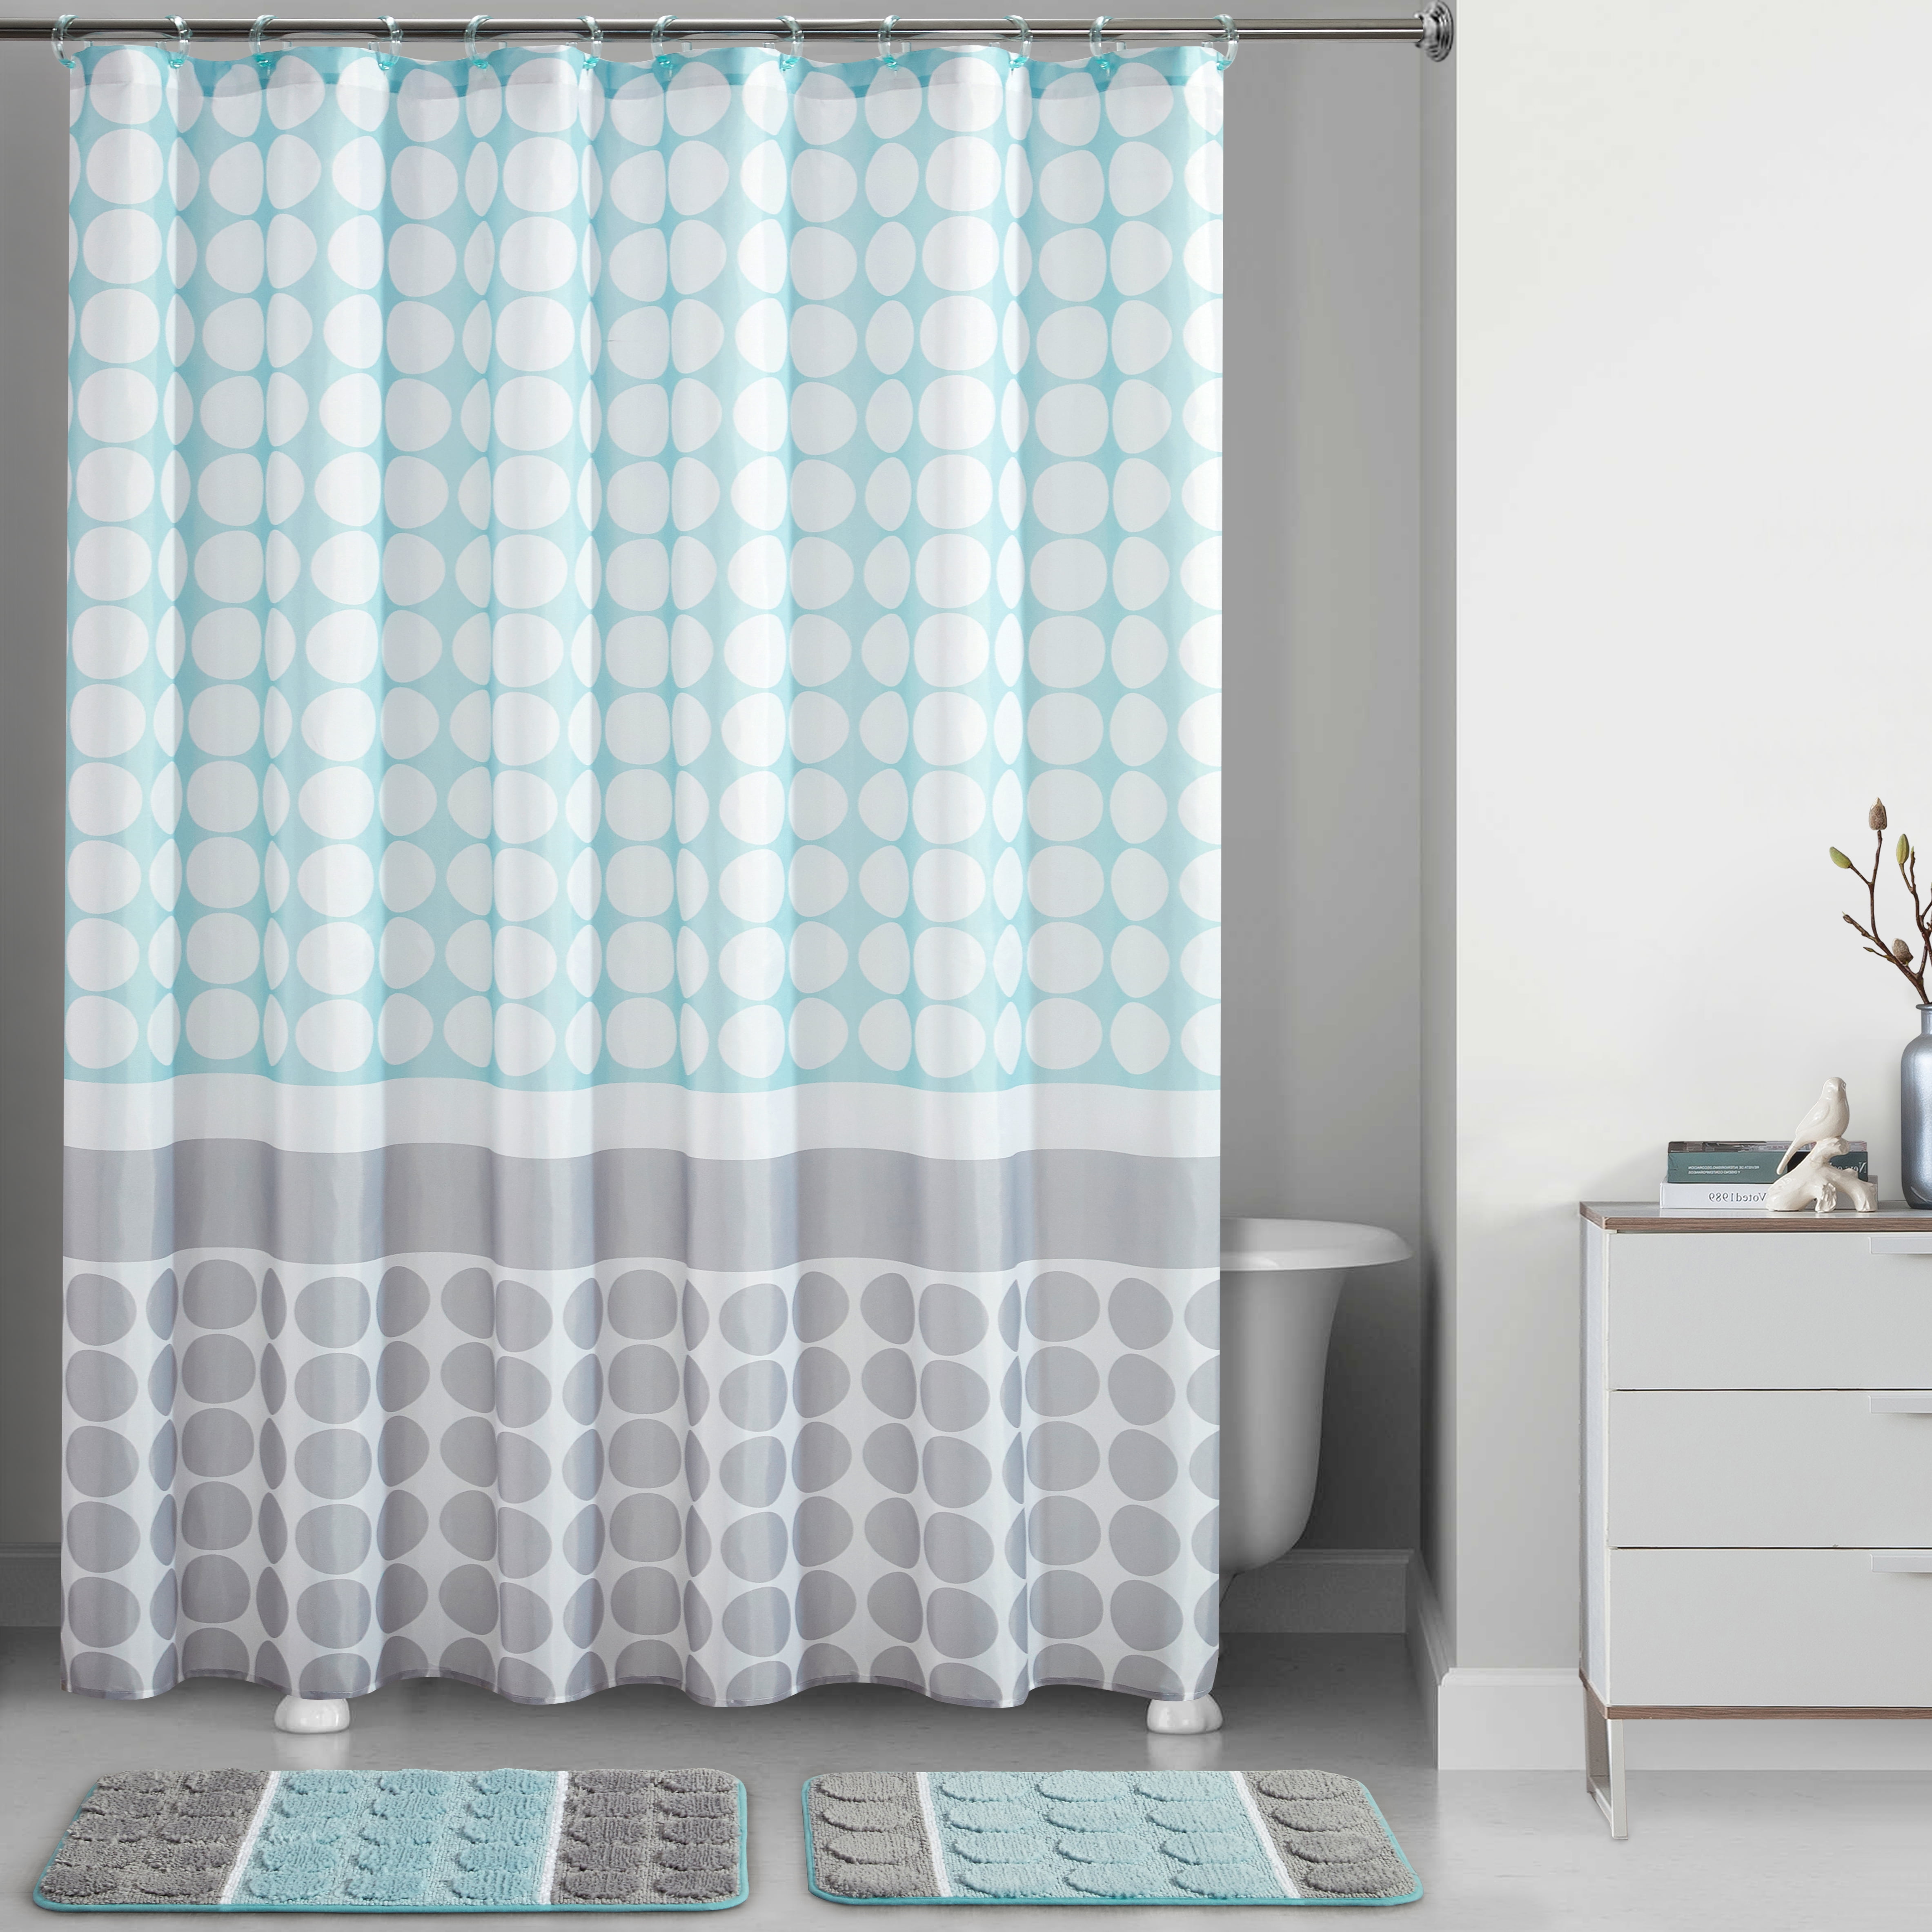 Details about   NEW Mainstays Marble 15-Piece Shower Curtain Bath Set 